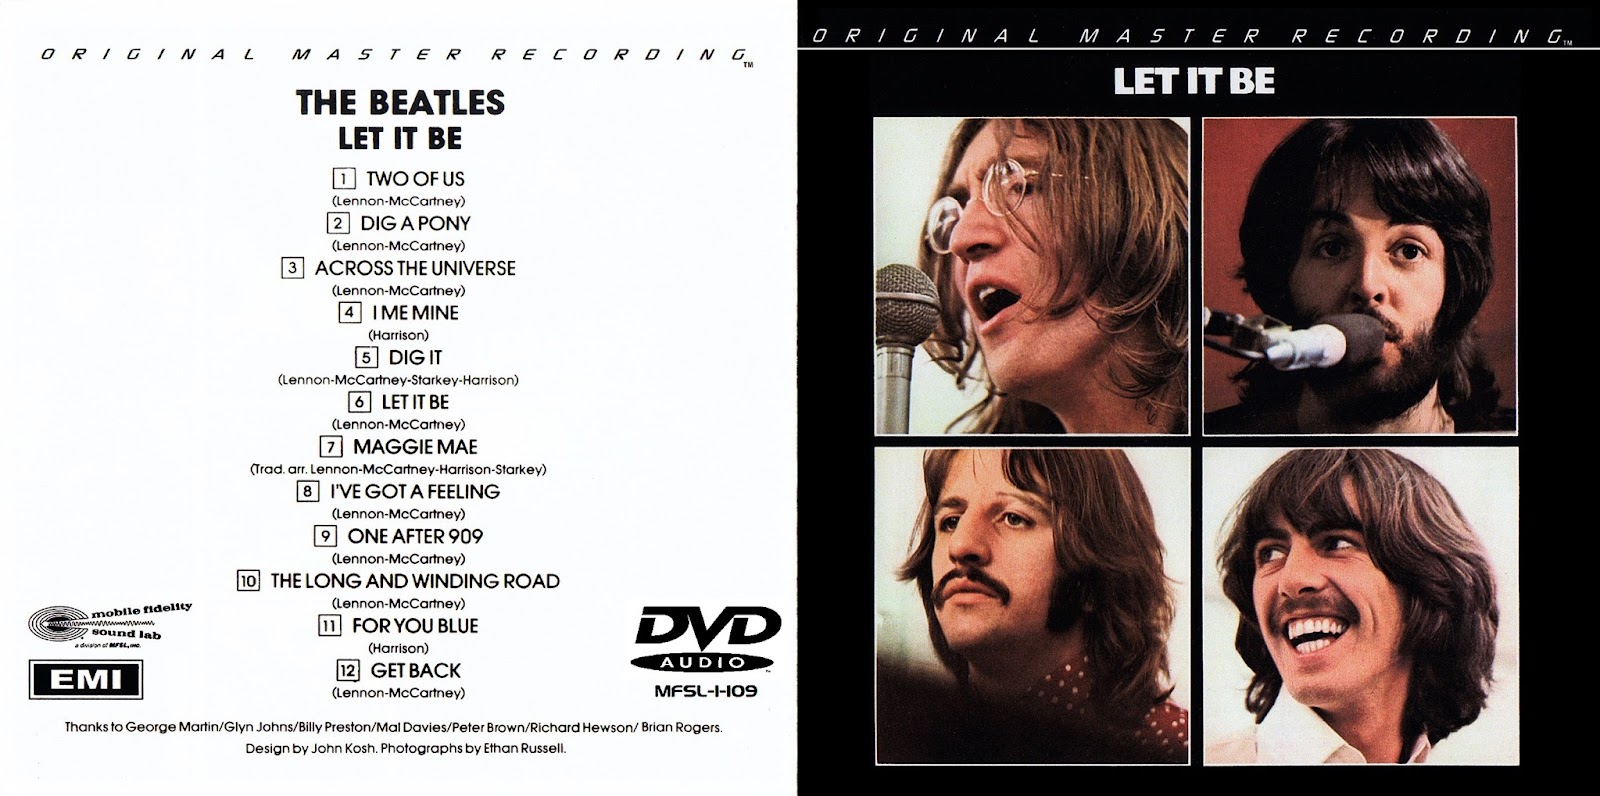 Песня лет ит би. “Let it be” сингл 1970. The Beatles Let it be 1970 обложка. The Beatles - Let it be. The Beatles "Let it be, CD".